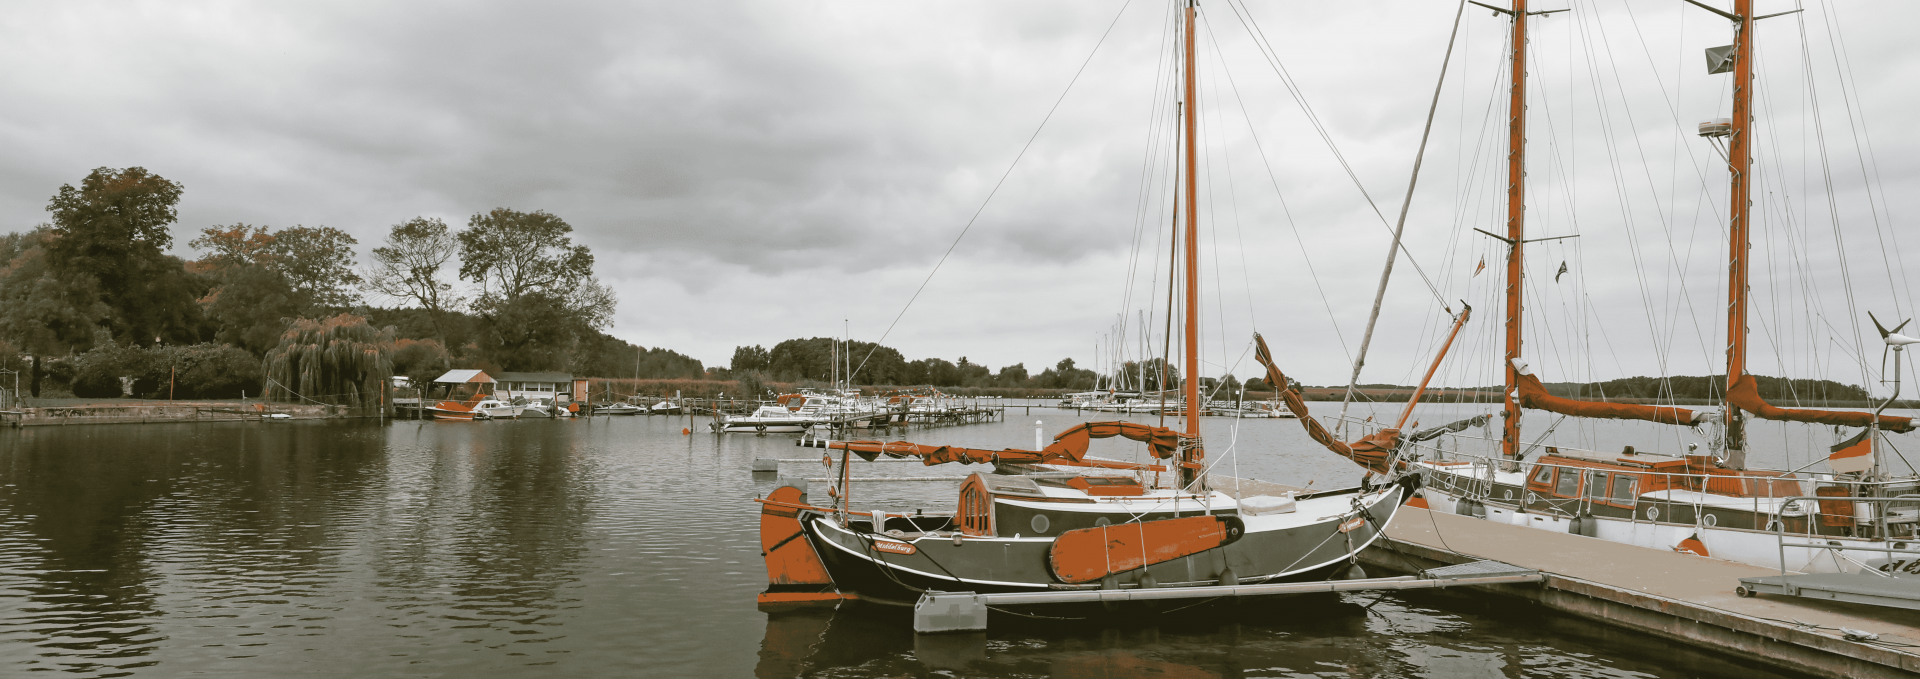 Hafen Lassan, © TMV/Gohlke